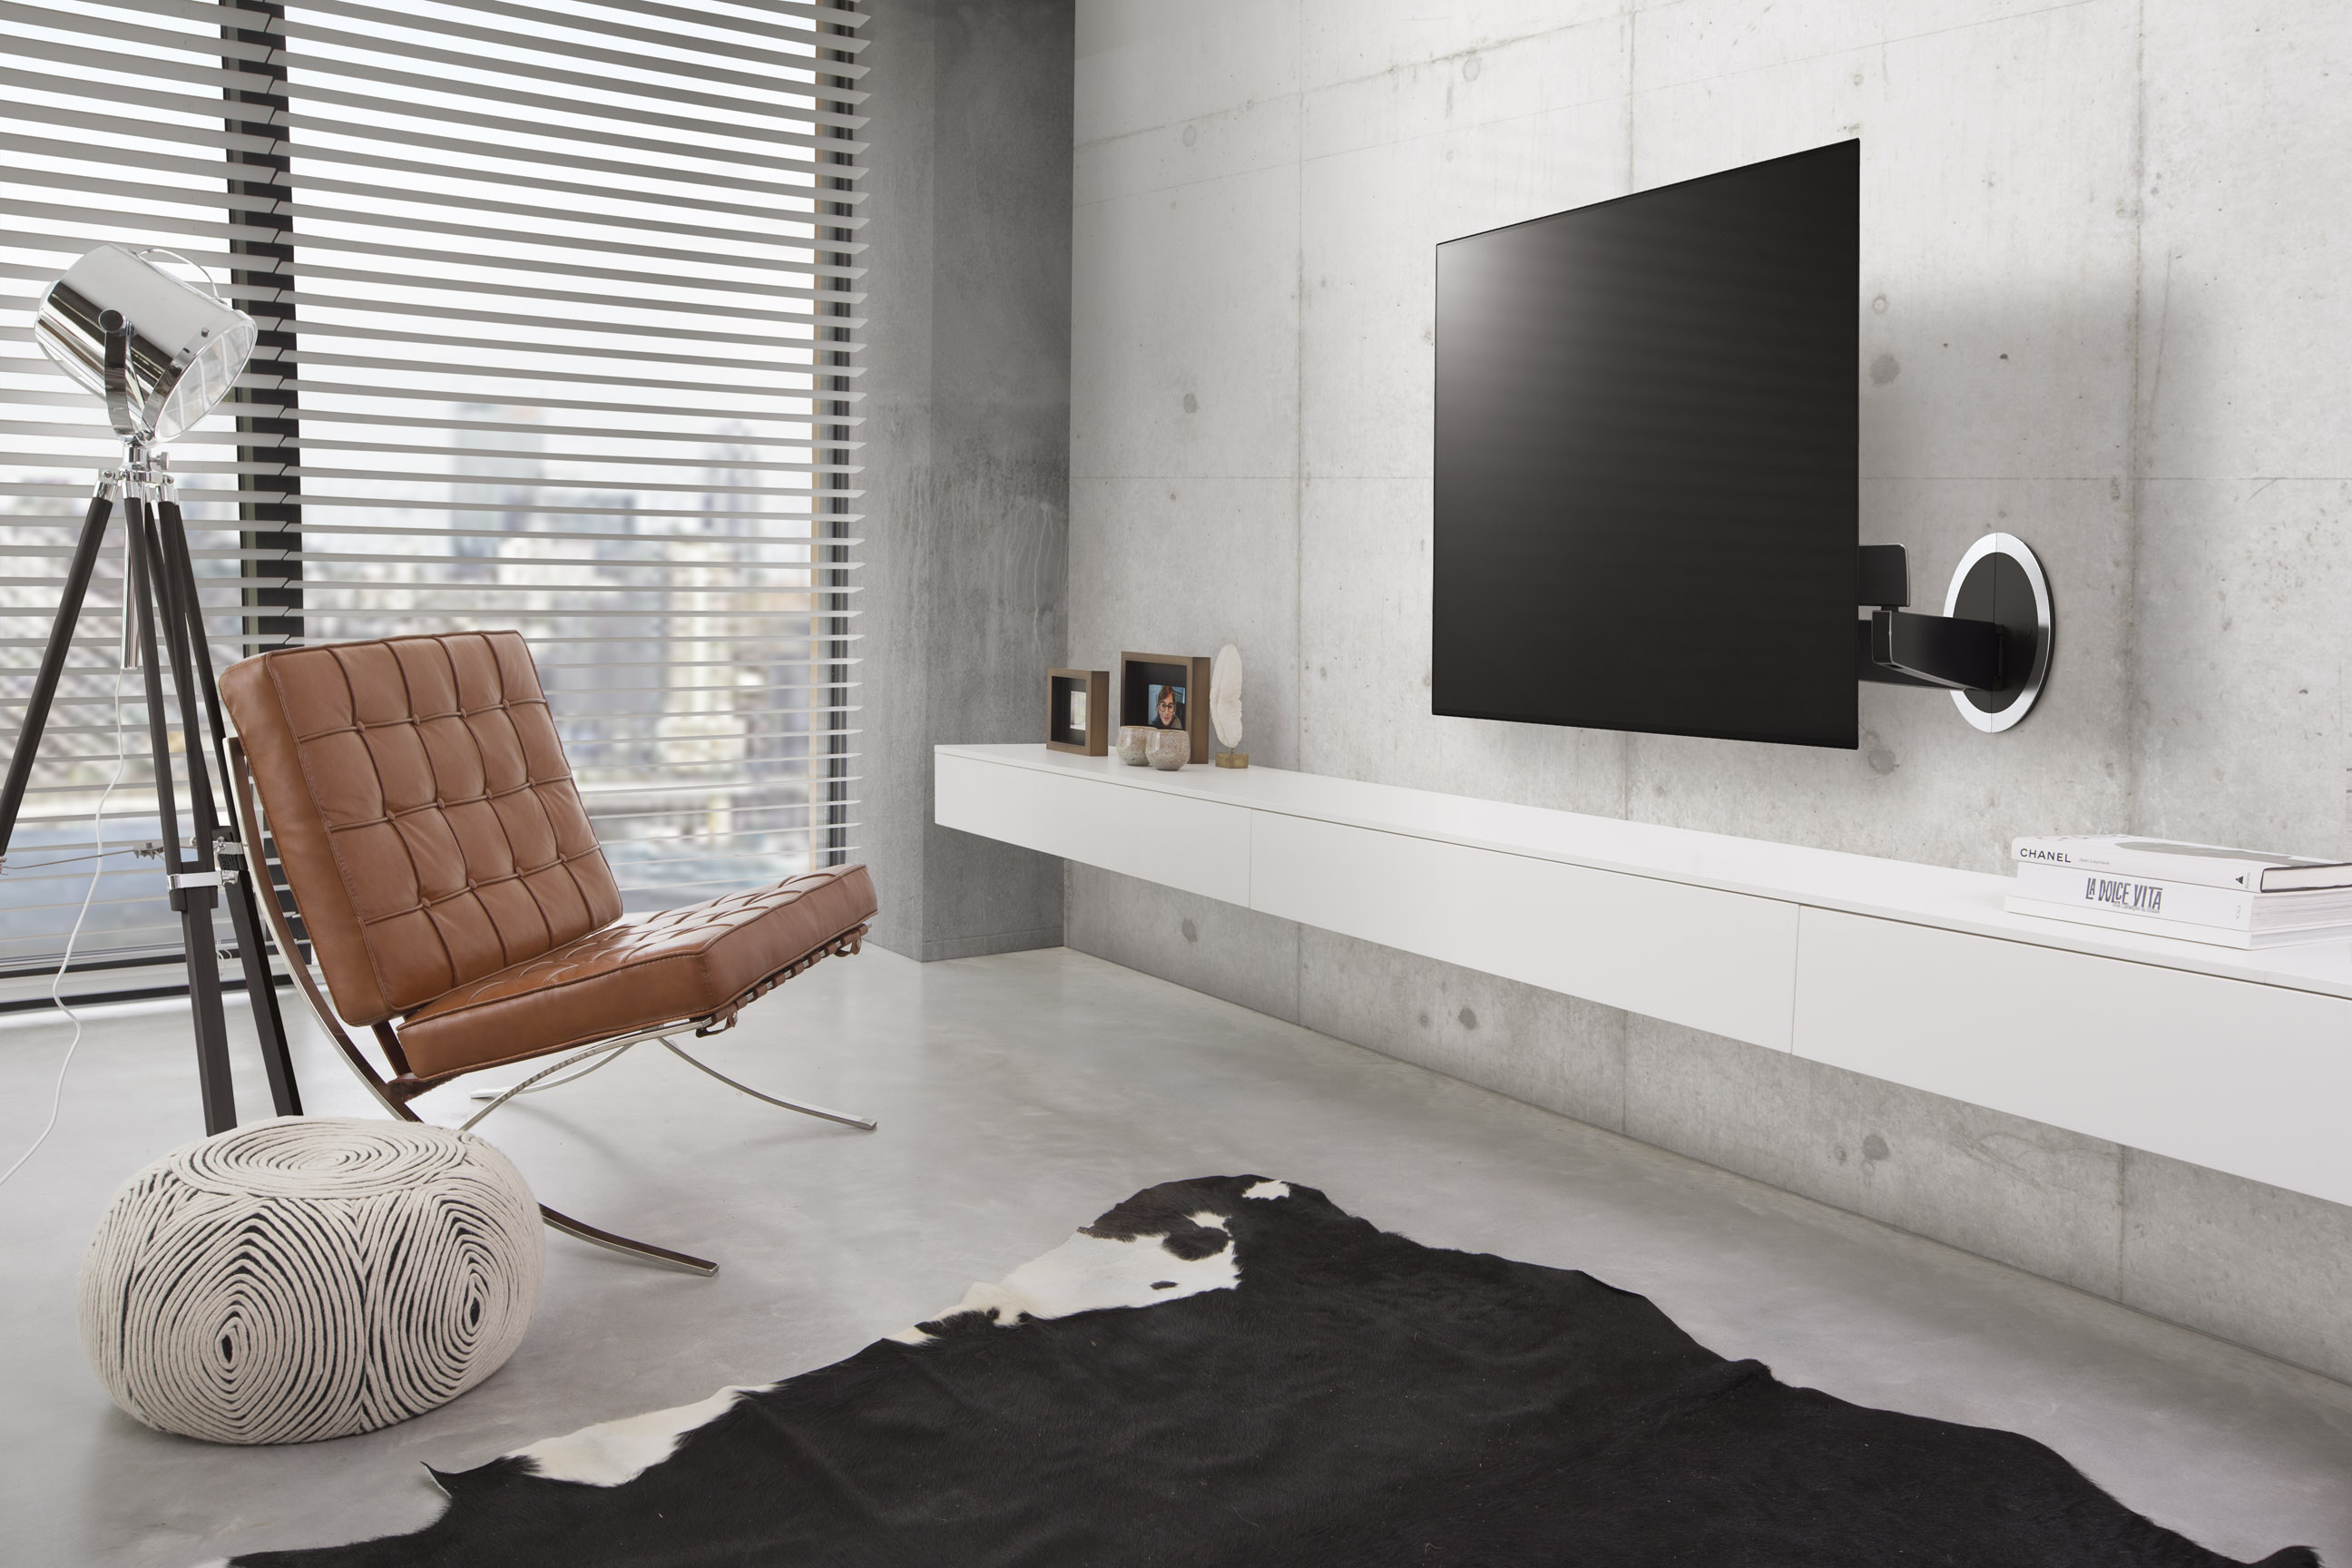 LG OLED muurbeugel voor je LG tv! | Vogel's